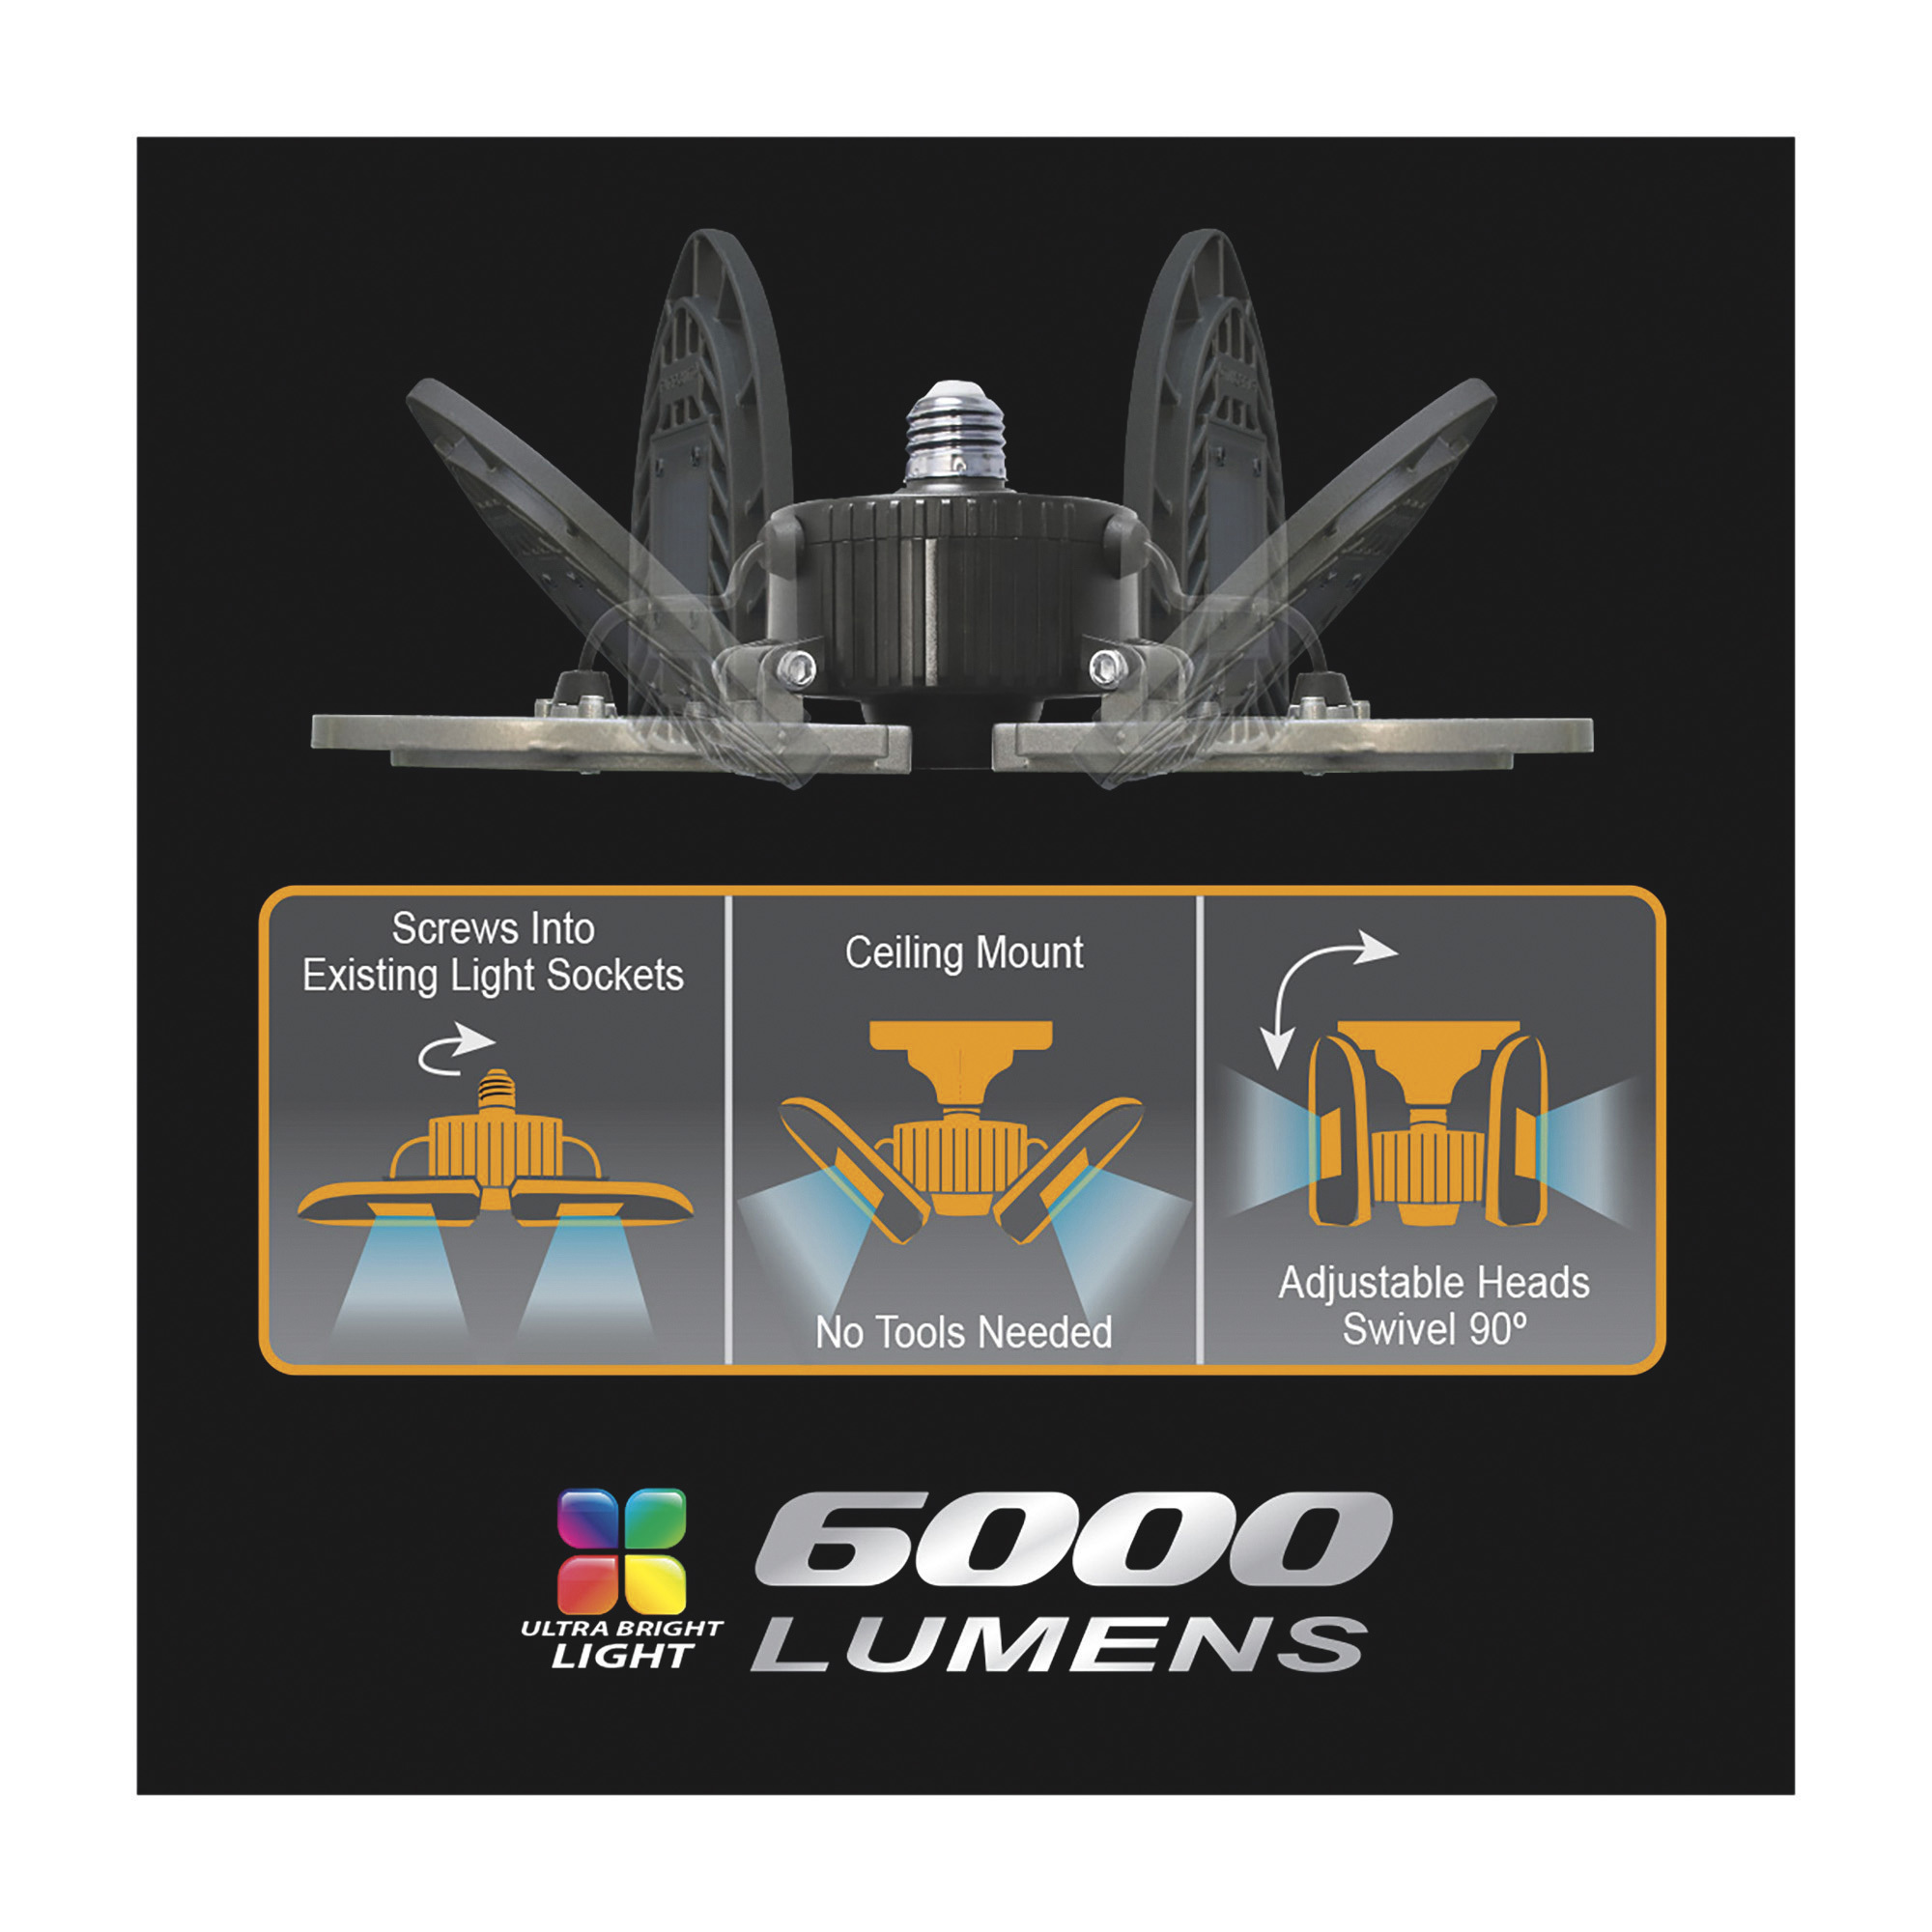 FarPoint LED Garage/Ceiling Light, 10,000 Lumens, Model# FLFB31004